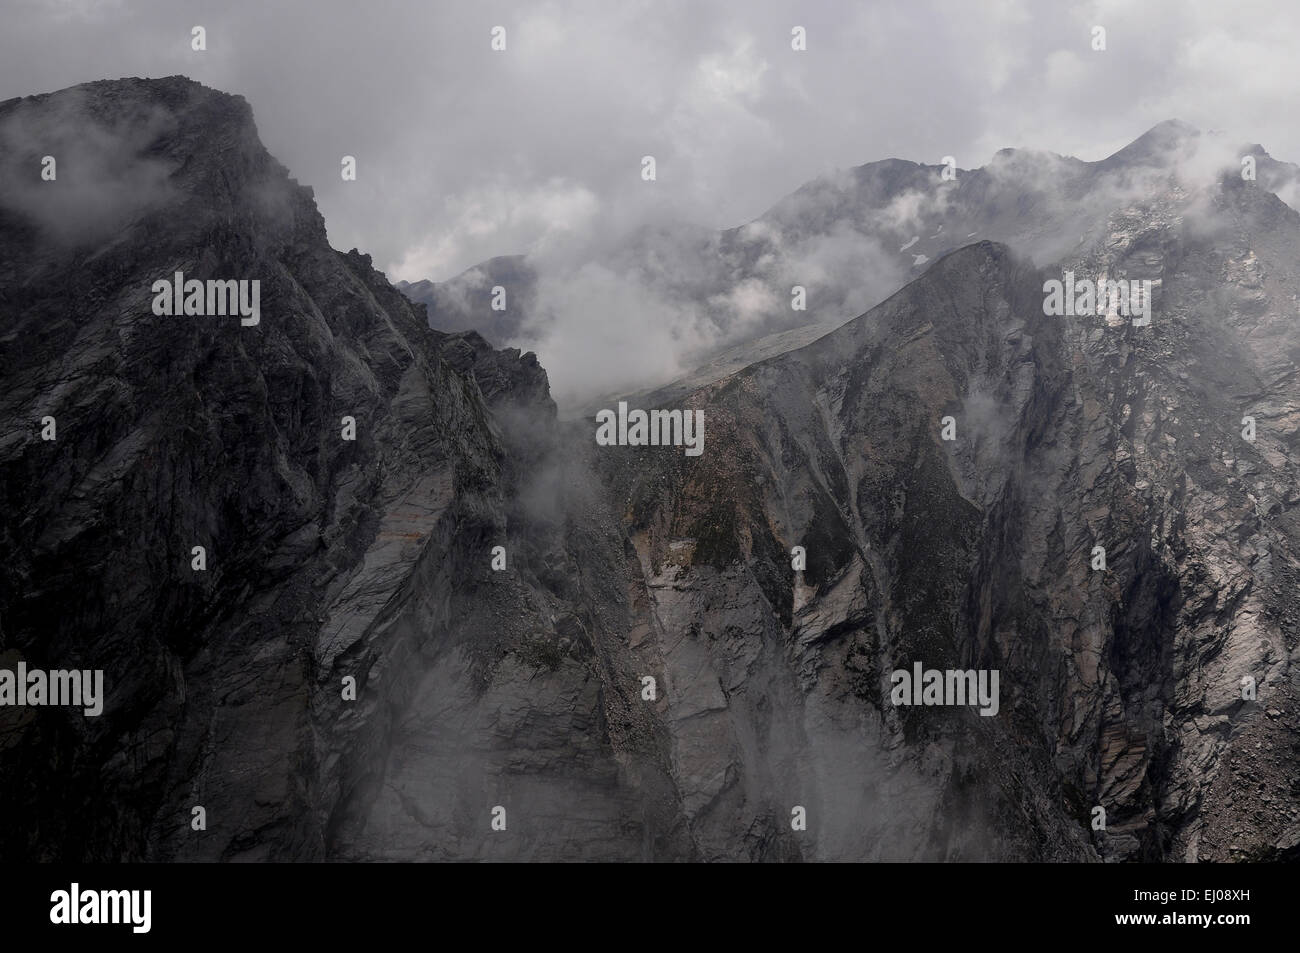 Switzerland, Europe, Ticino, Greina, Parco Adula, Val Malvaglia, Passo del Laghetto, Pizzo Forca, burr, mountains, clouds, fog Stock Photo